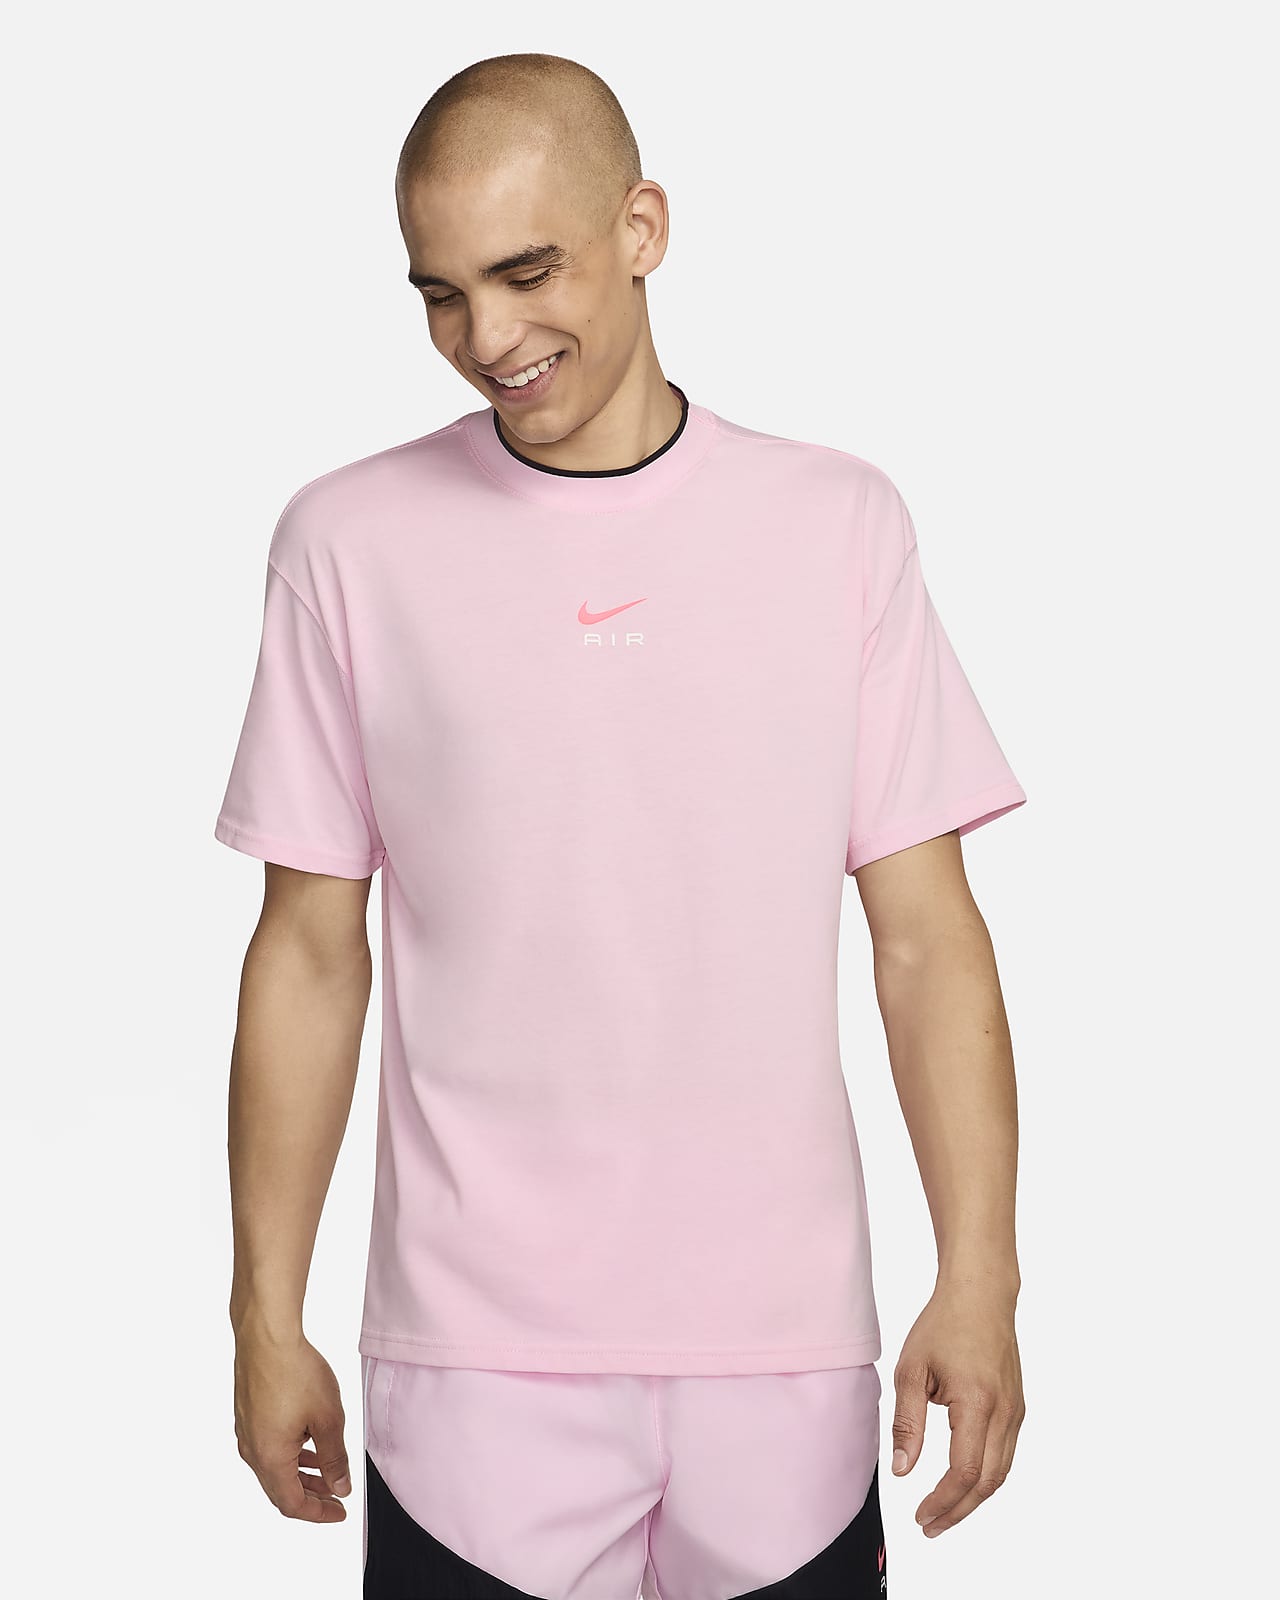 Nike Air Herren-T-Shirt